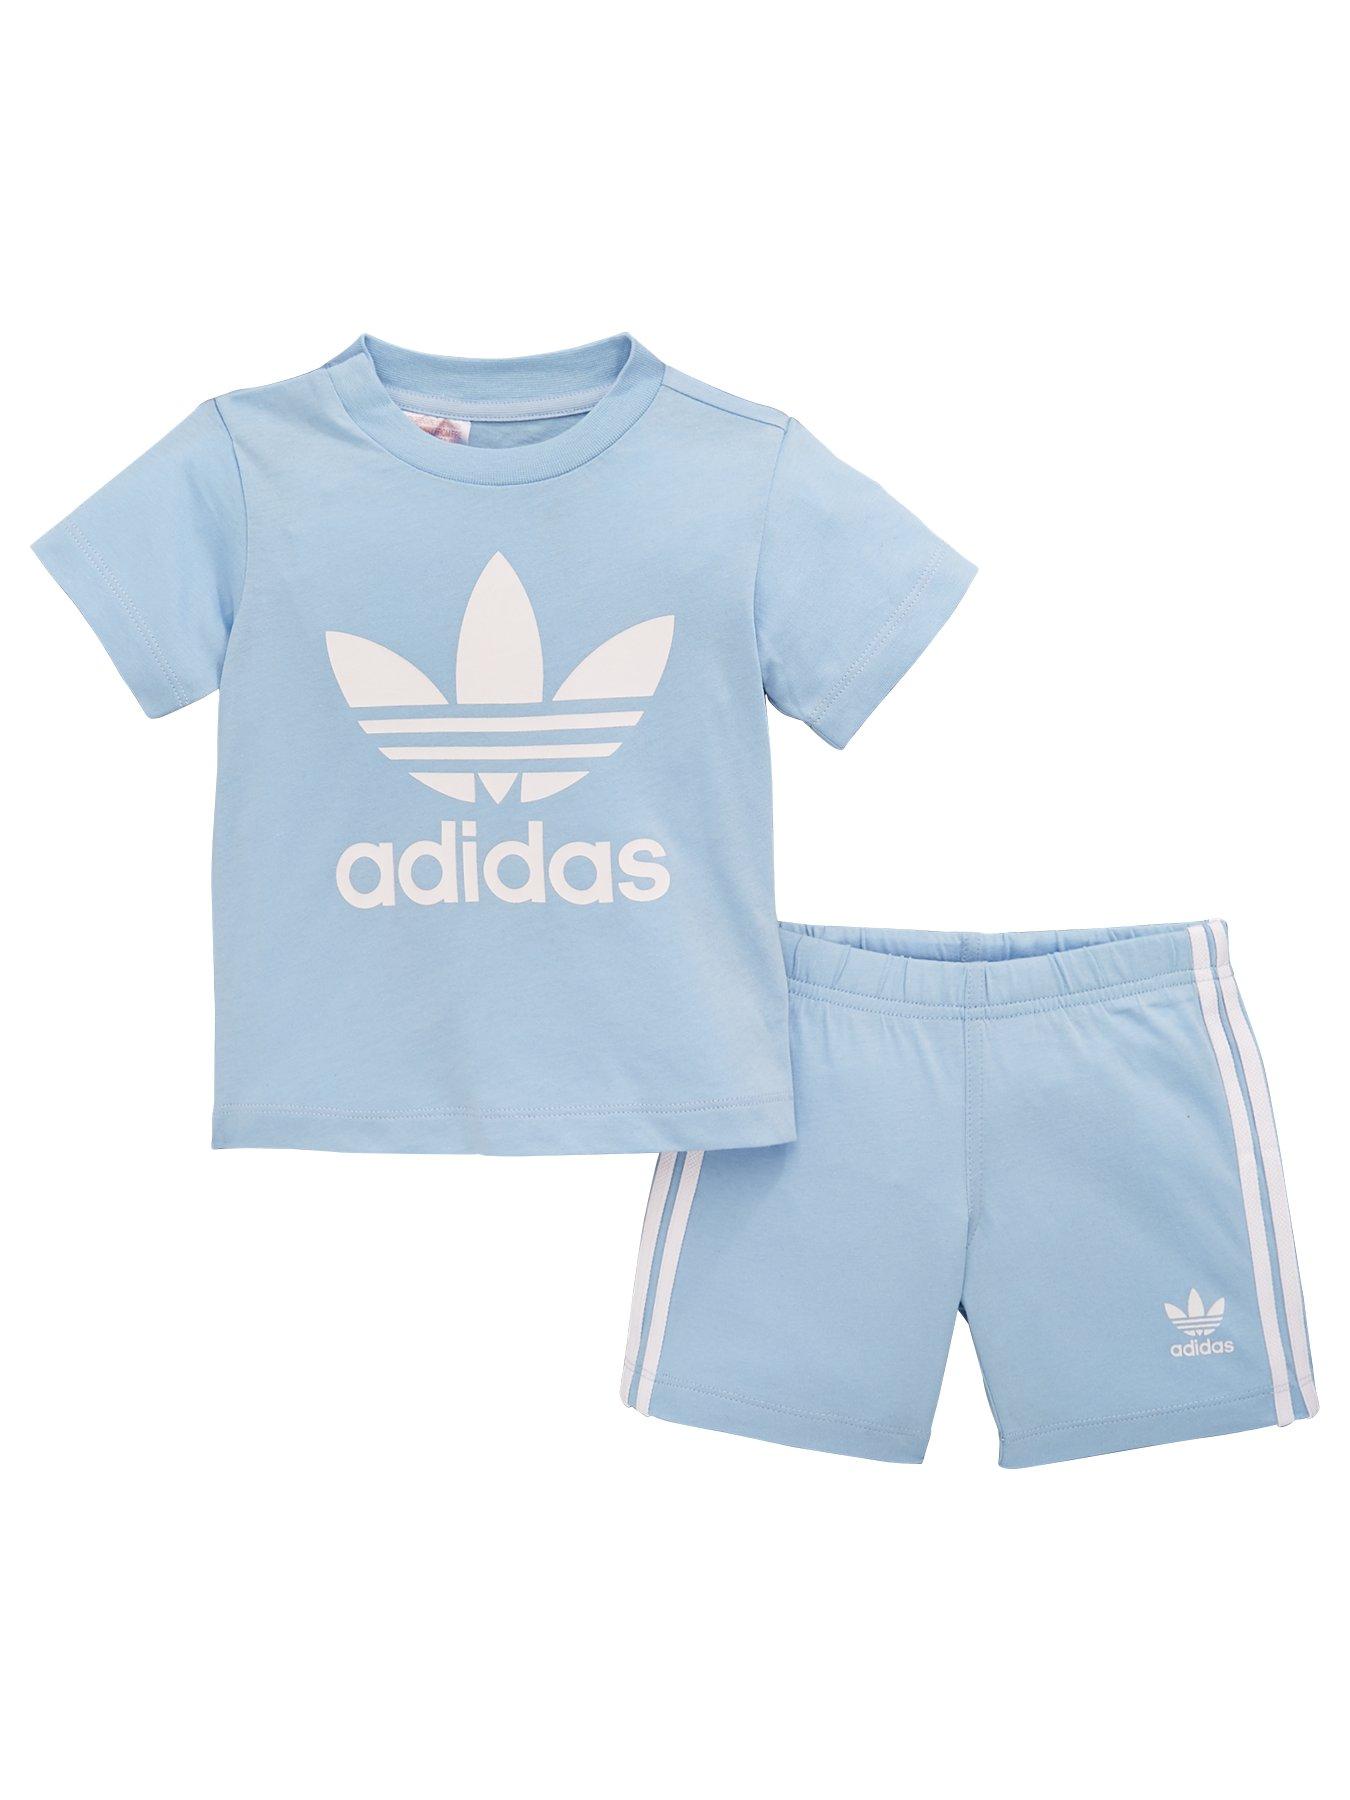 baby adidas short set